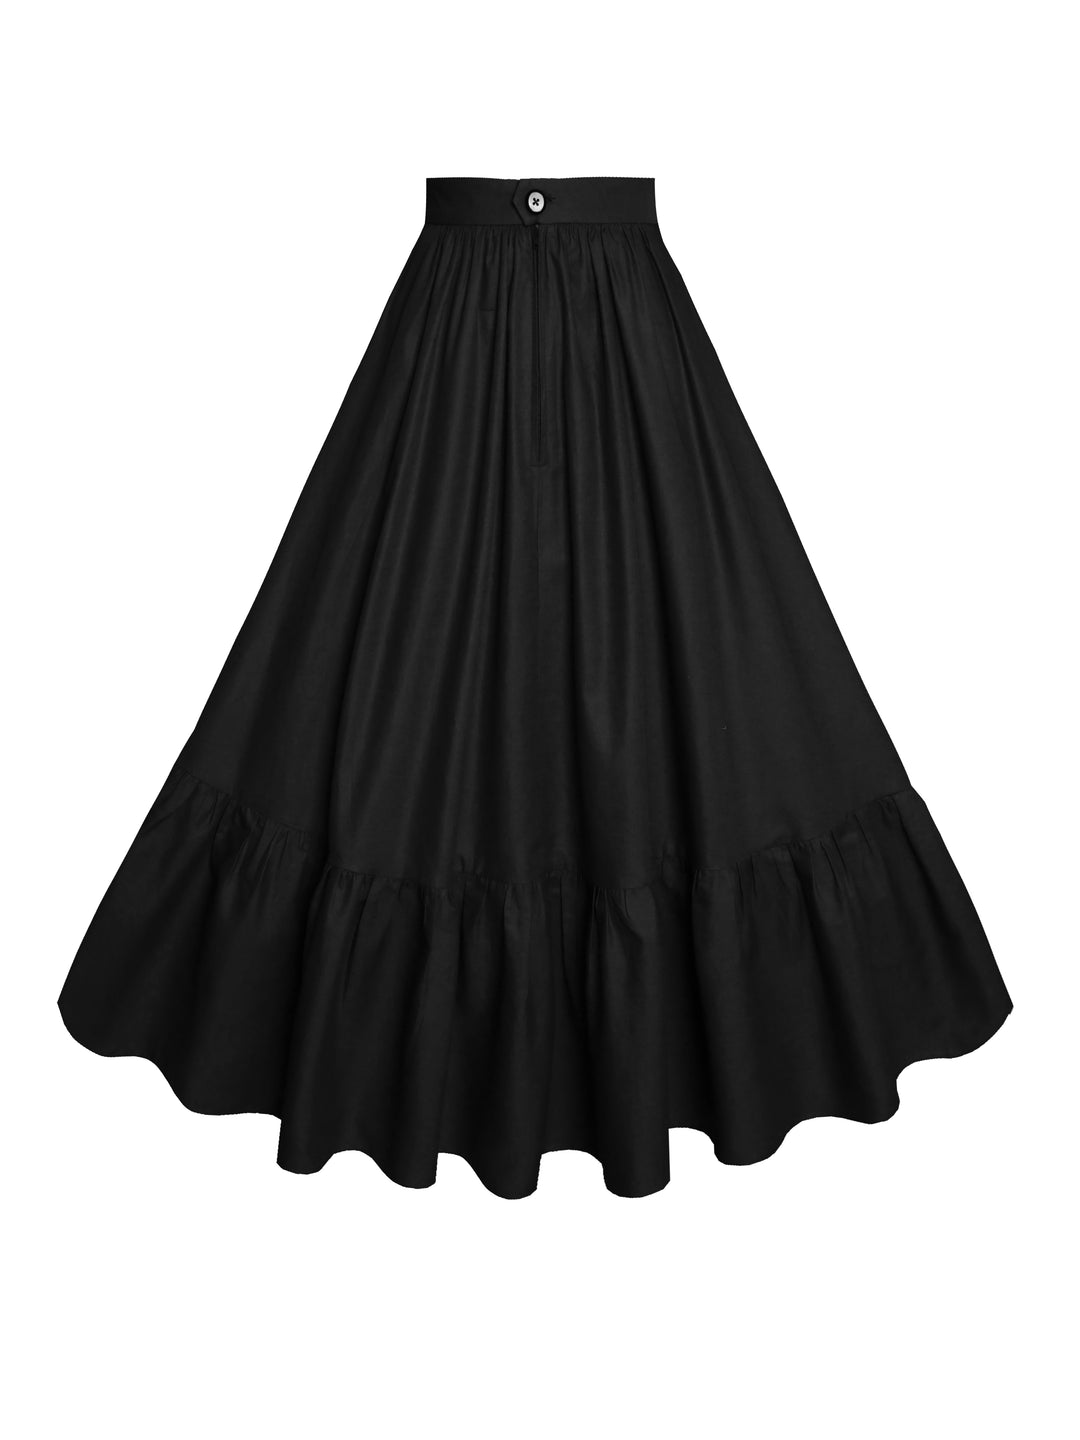 MTO - Rosita Skirt Raven Black Cotton